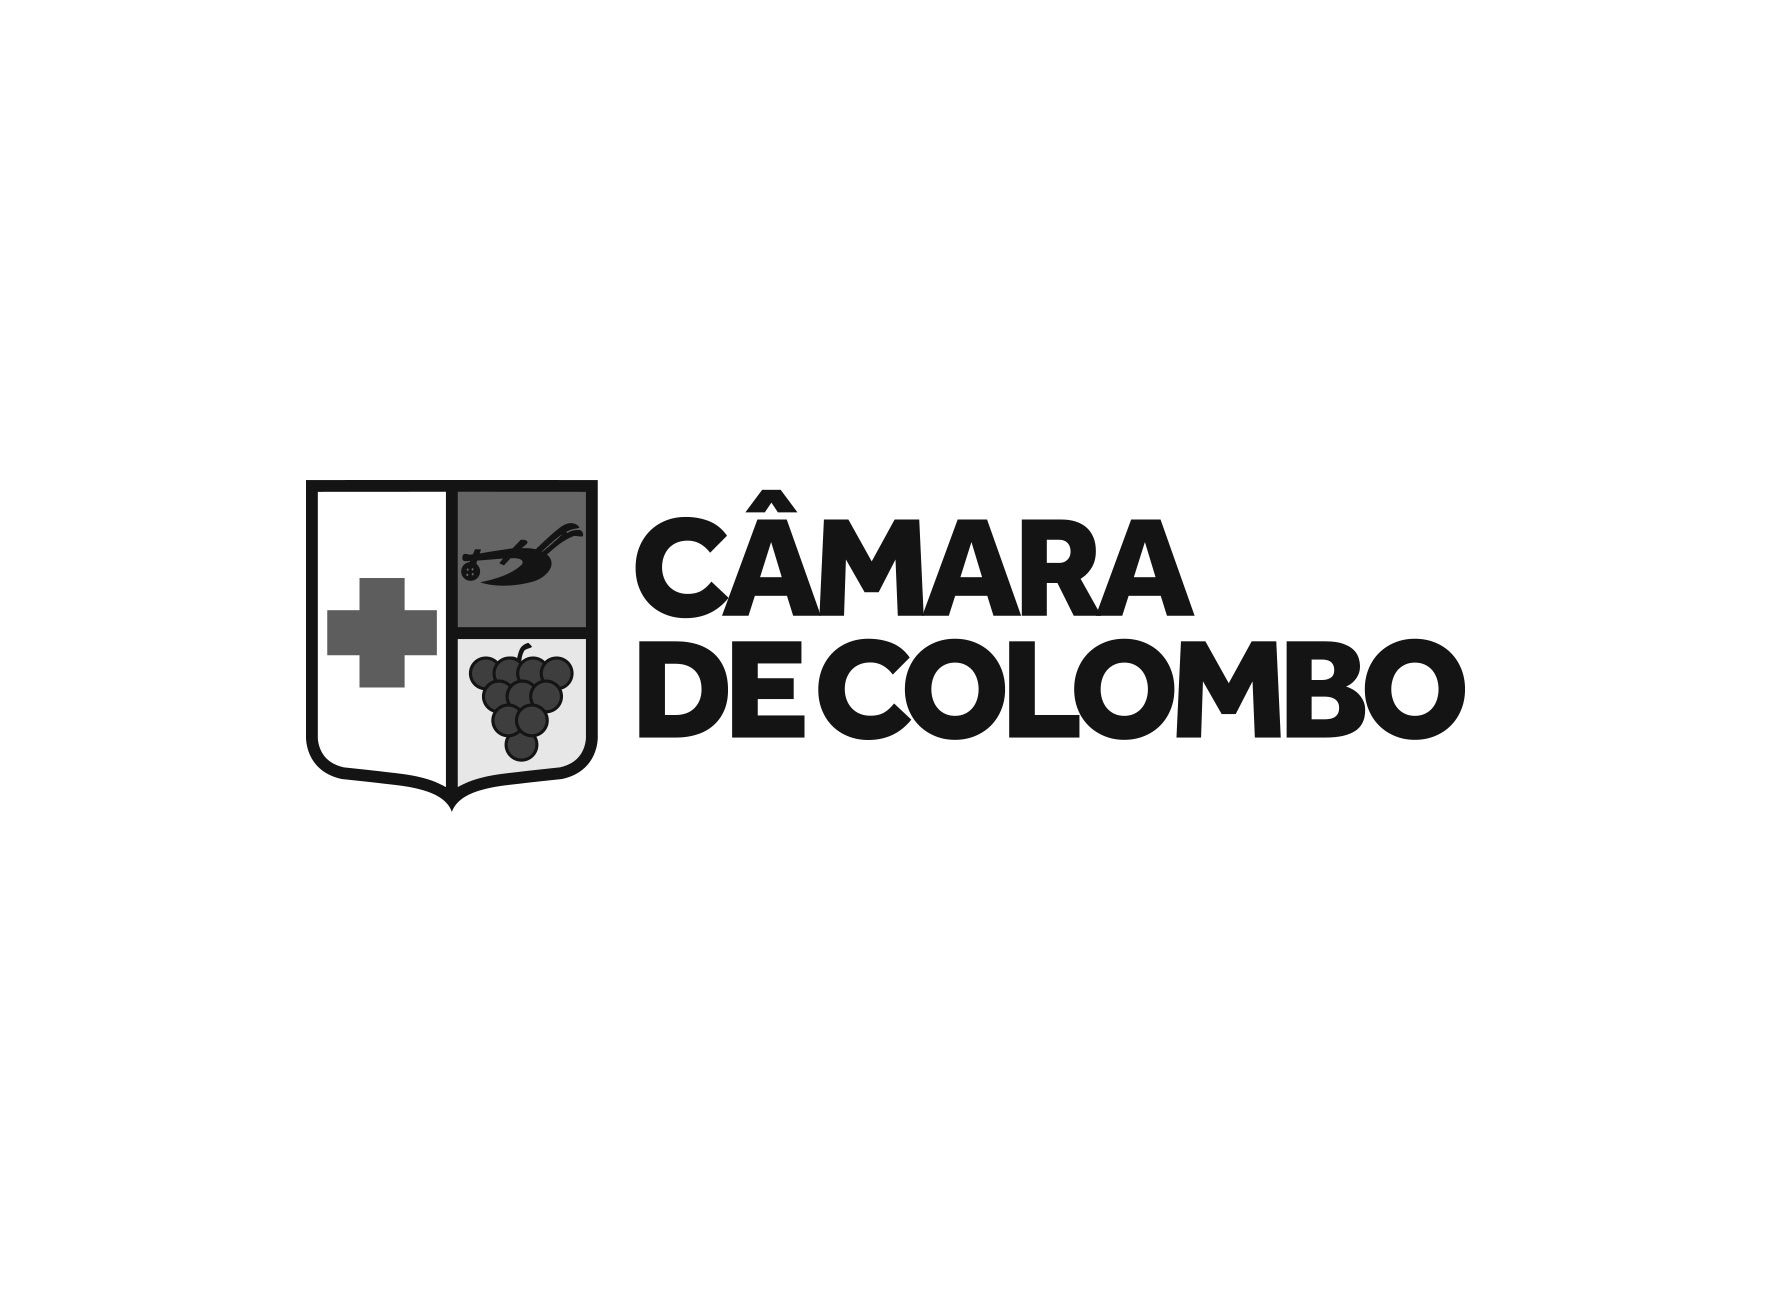 CAMARA DE COLOMBO